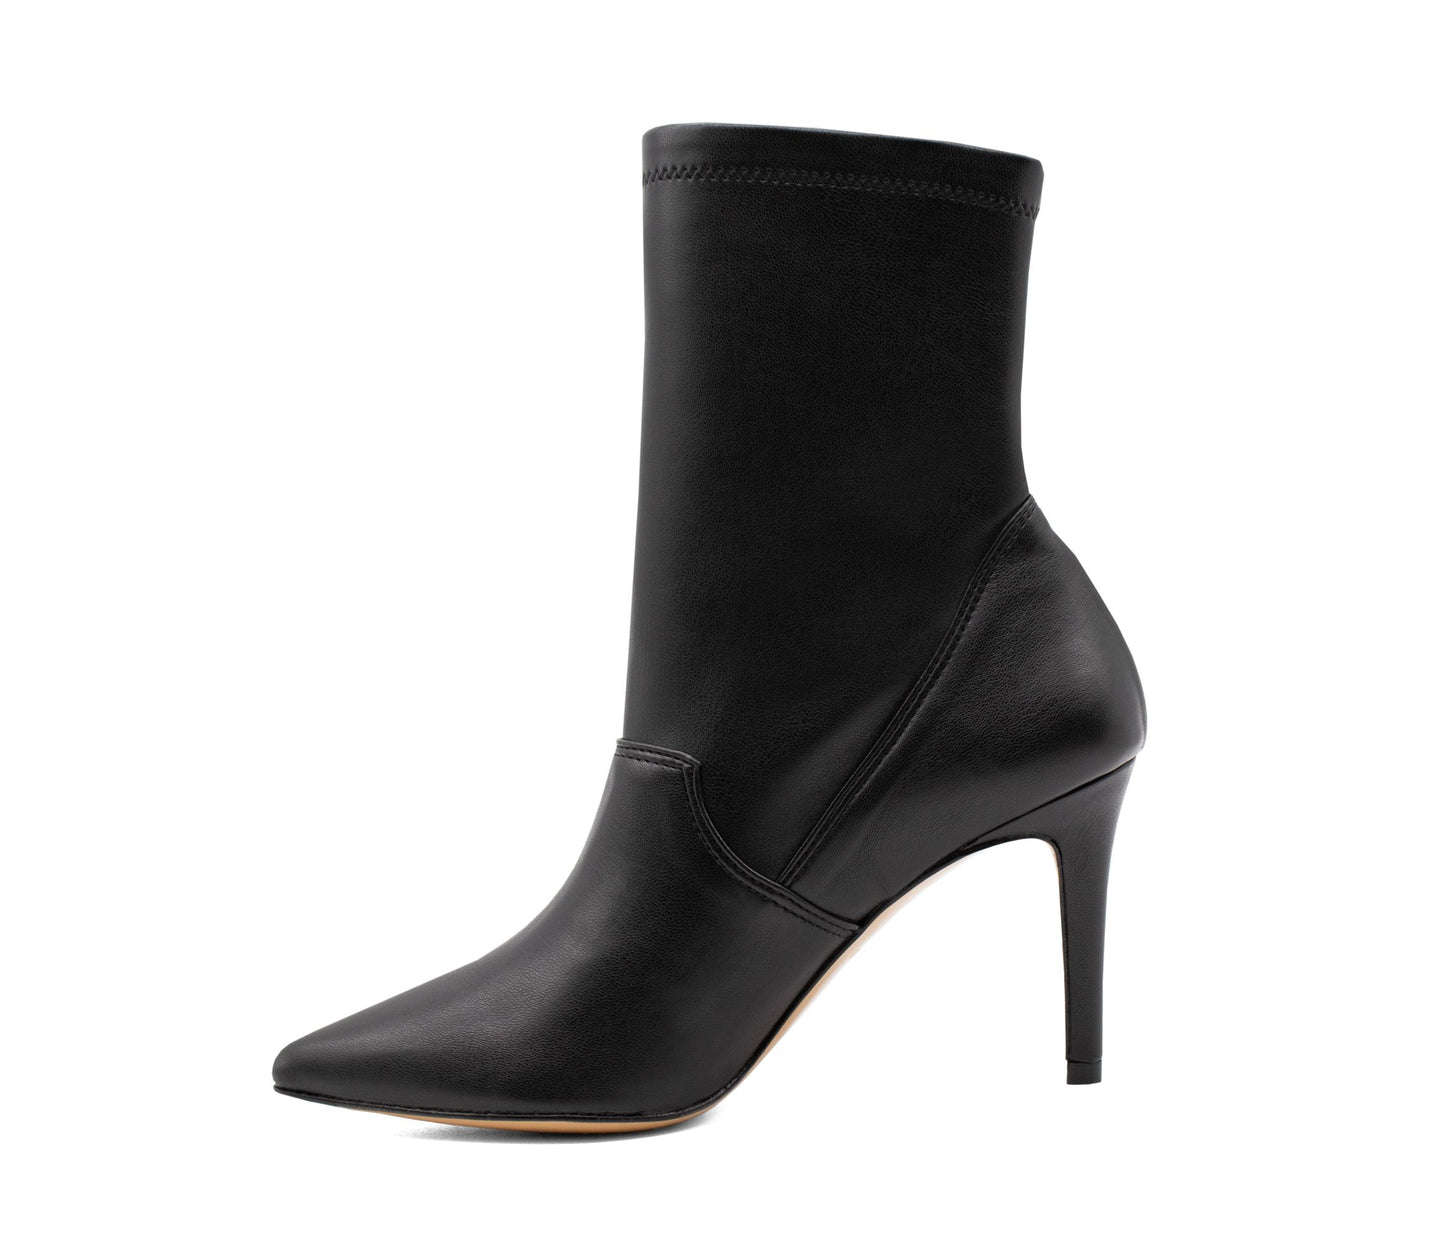 Cavalinho Amore Leather Boots - Black - 48100603.01_4